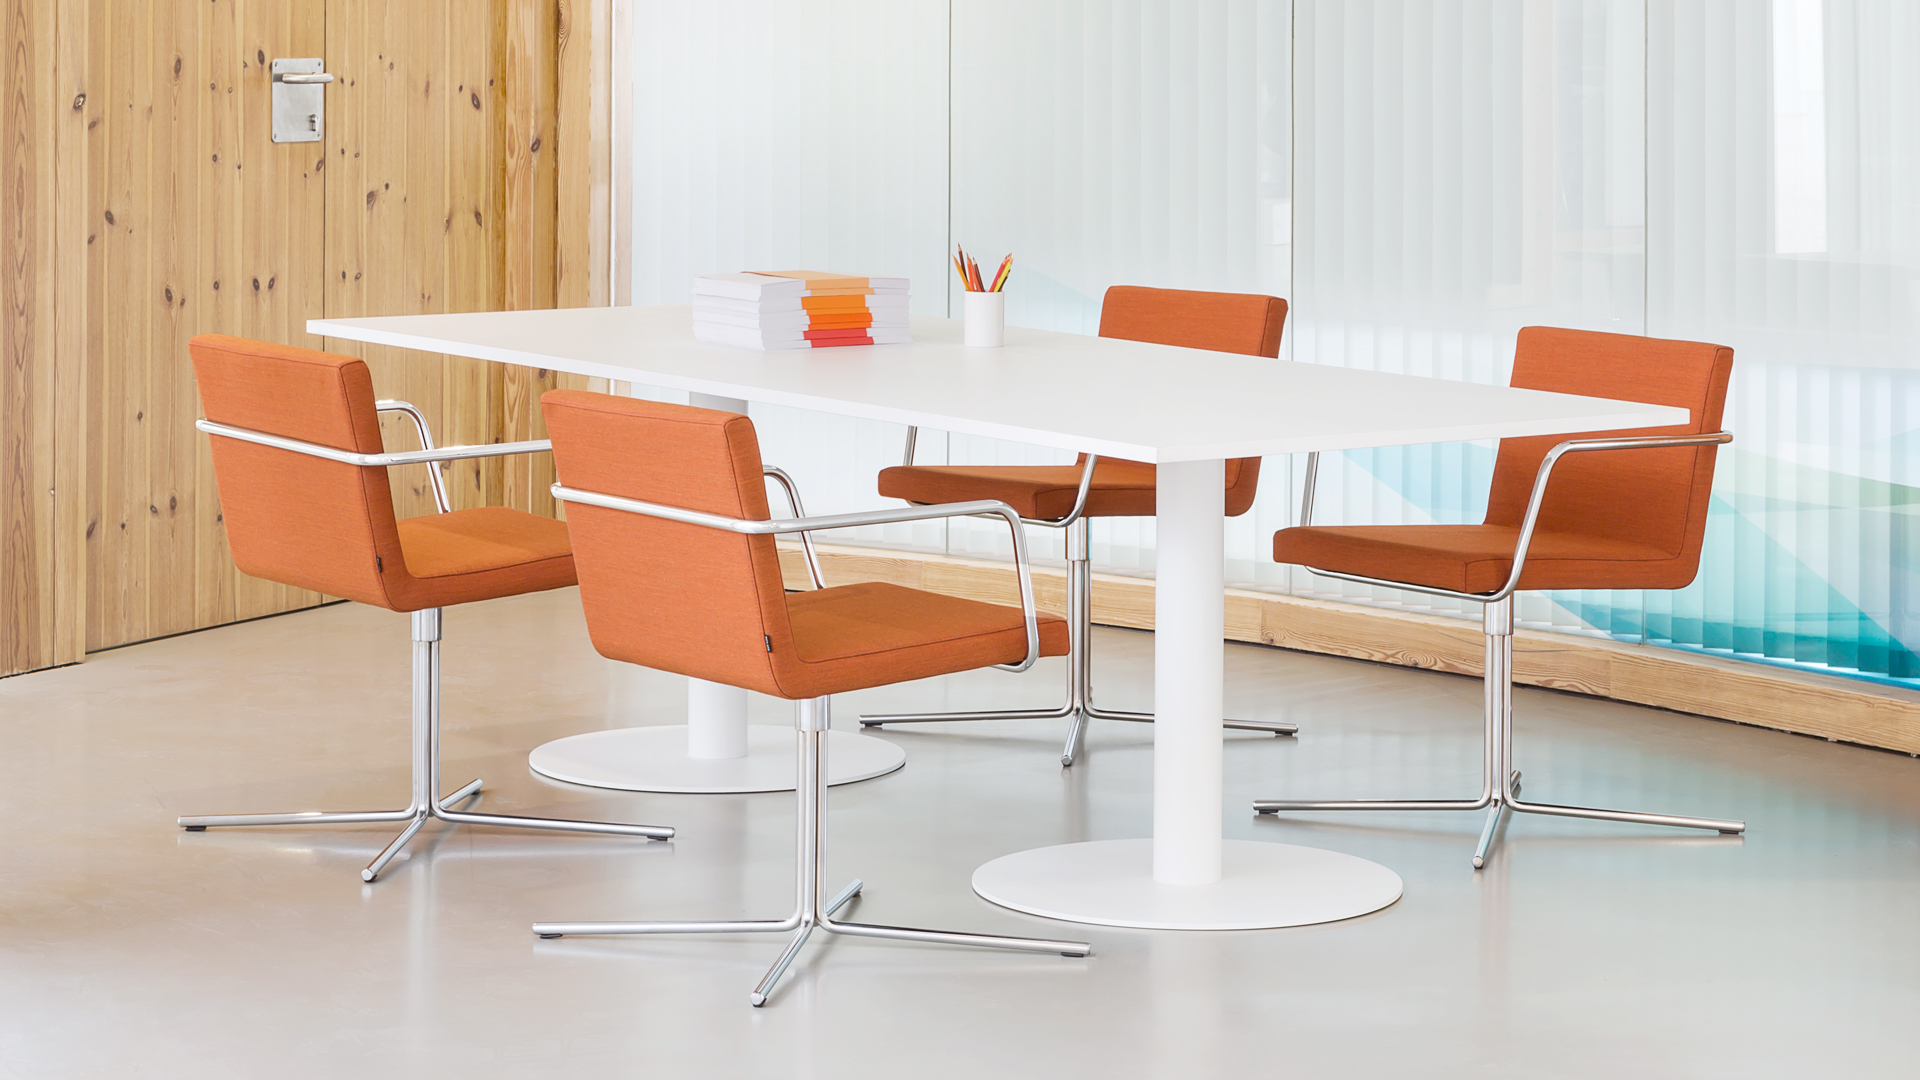 Las sillas de oficina ALN, disponibles en base giratoria o en piernas.